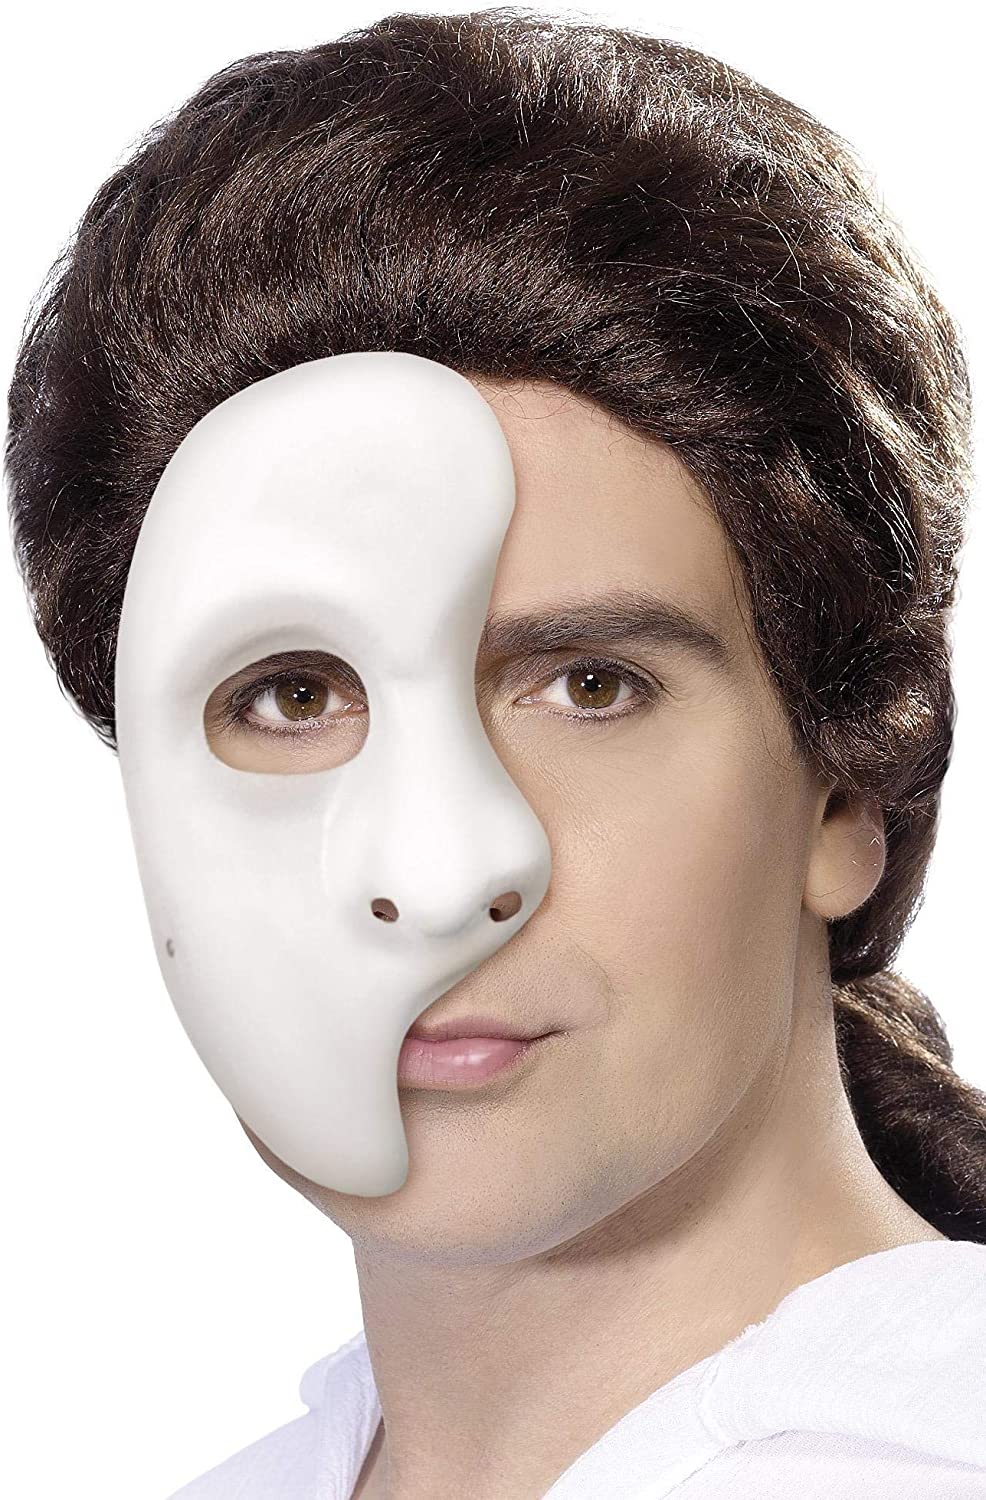 Maschera del fantasma dell'opera